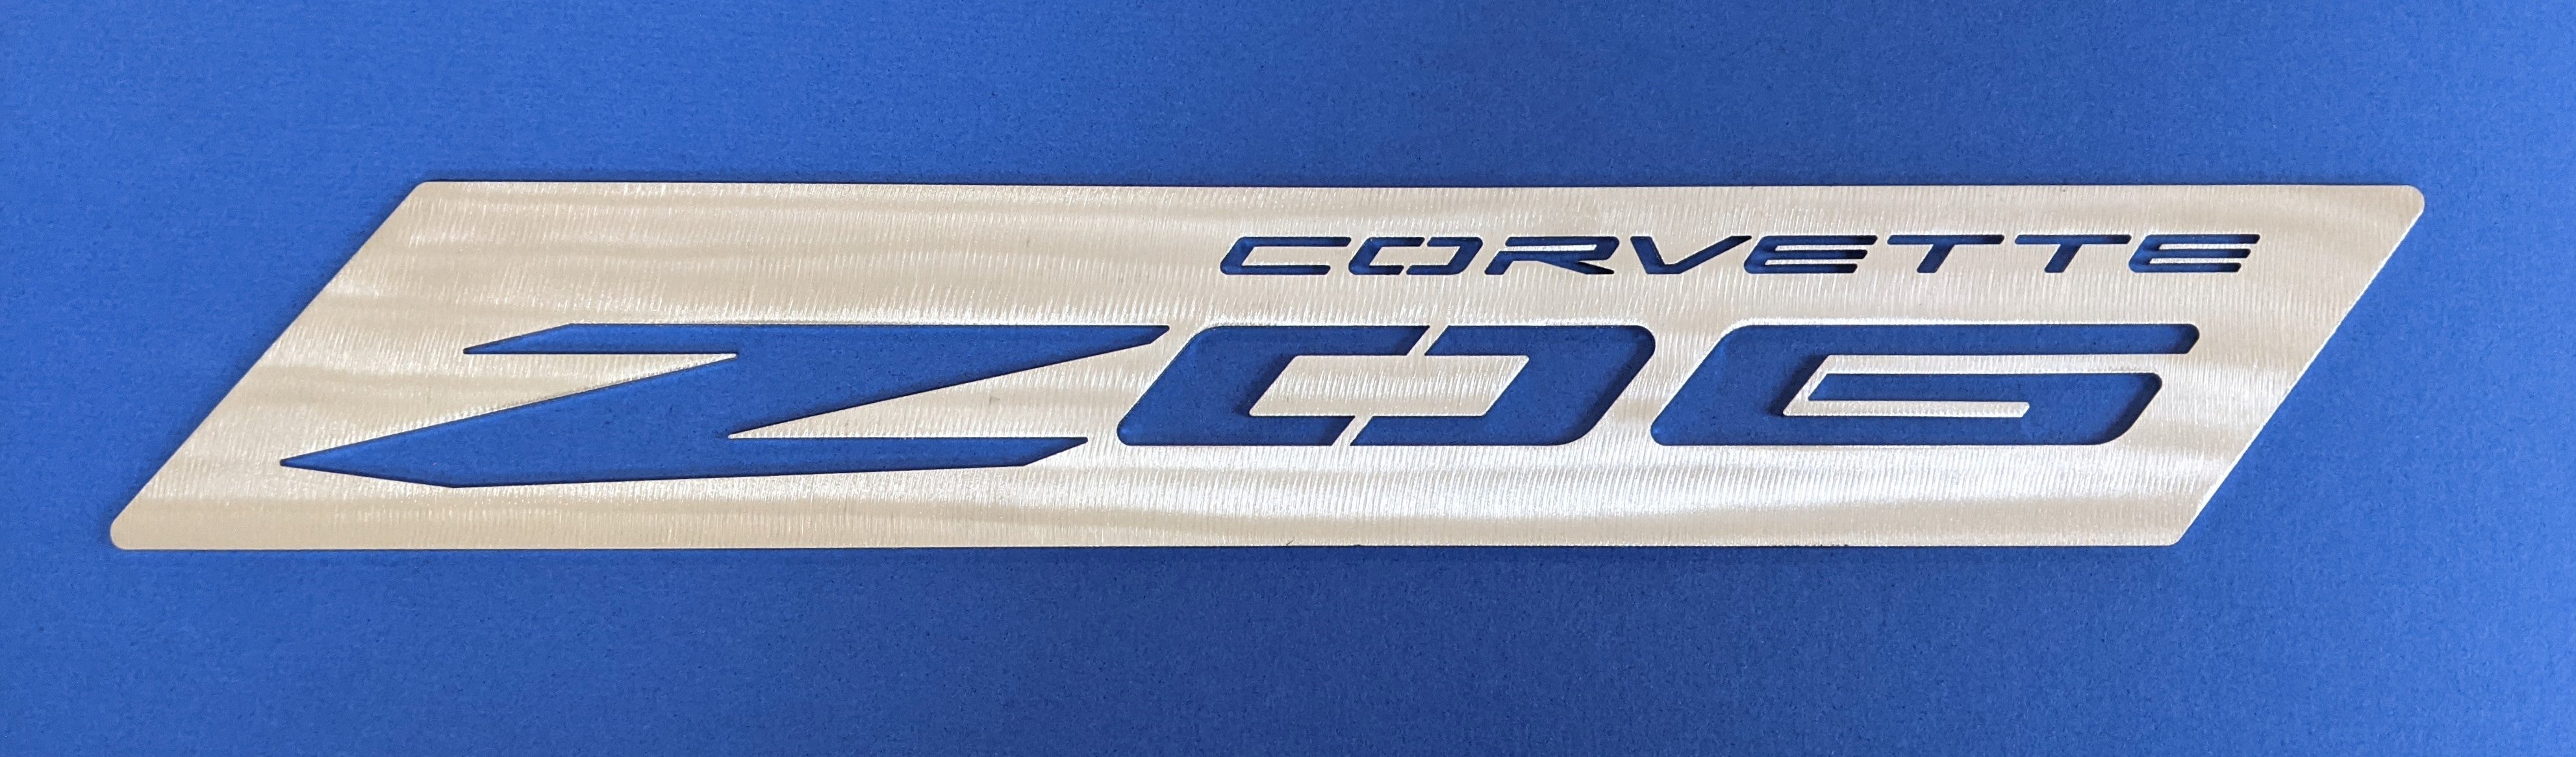 C8 Corvette Z06 Wall Hanging